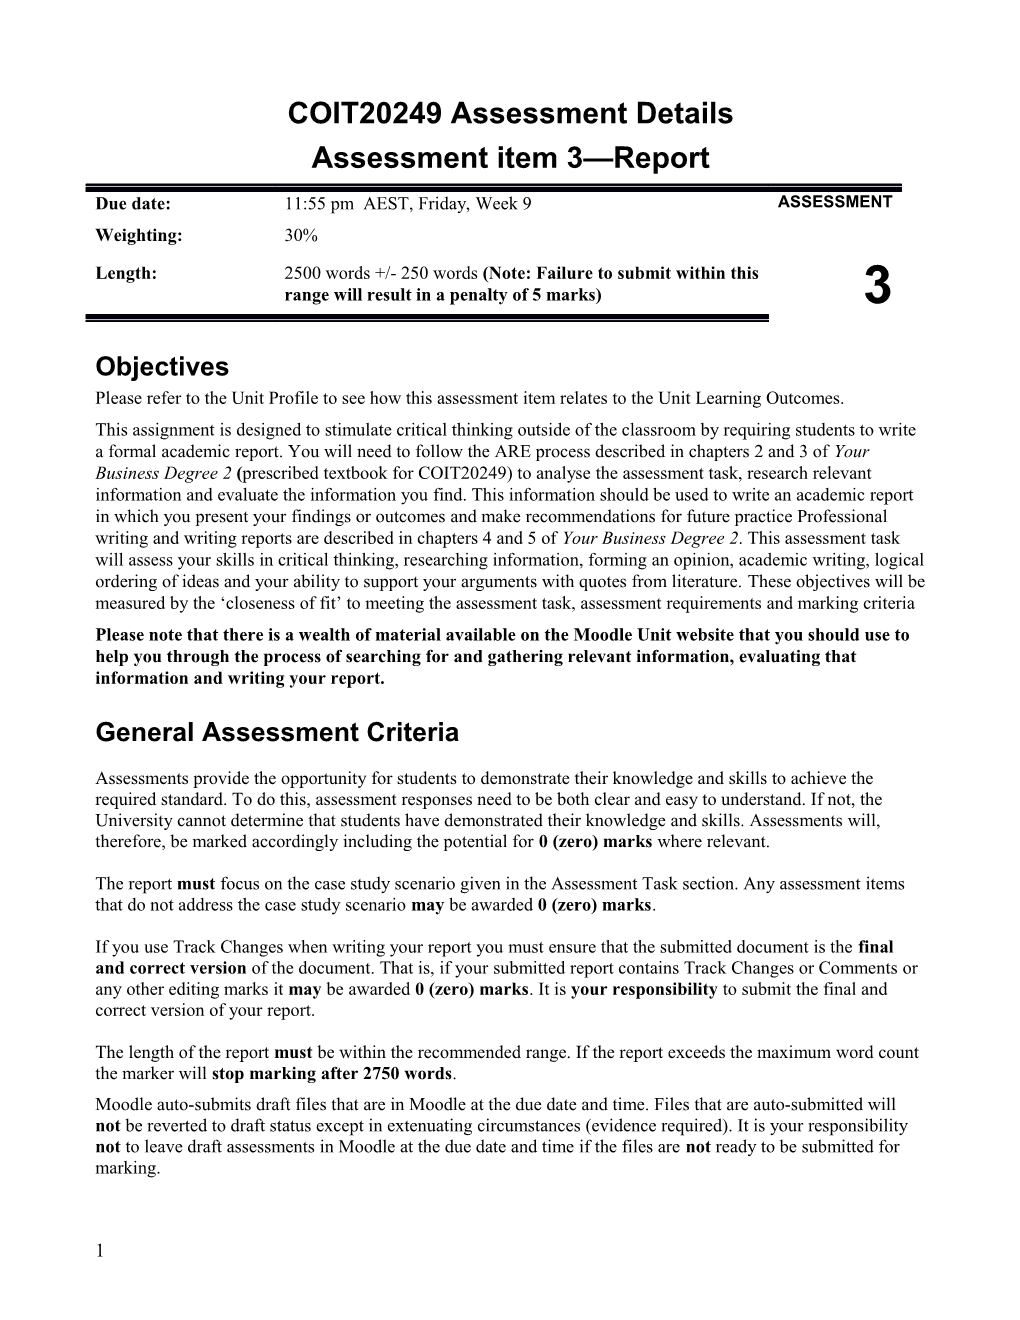 Assessment Item 3 Report